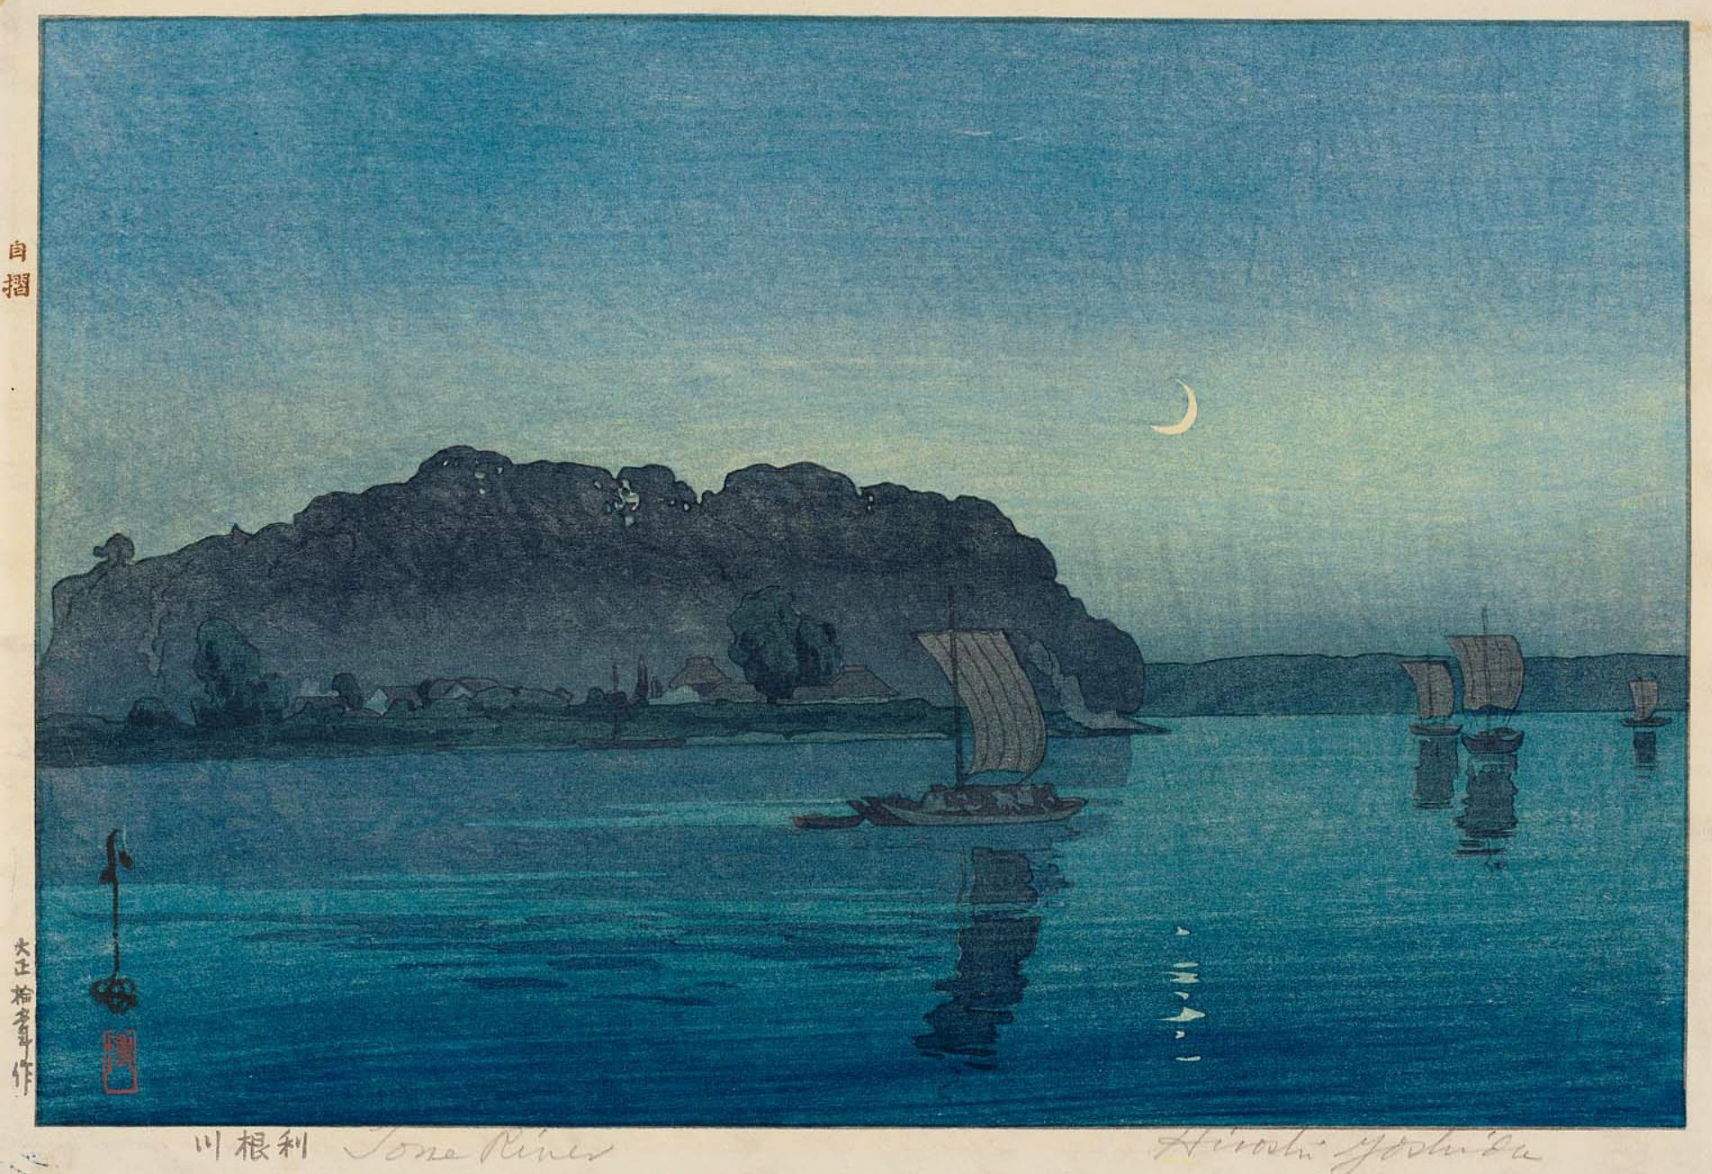 Hiroshi Yoshida “Tone River” 1926 woodblock print